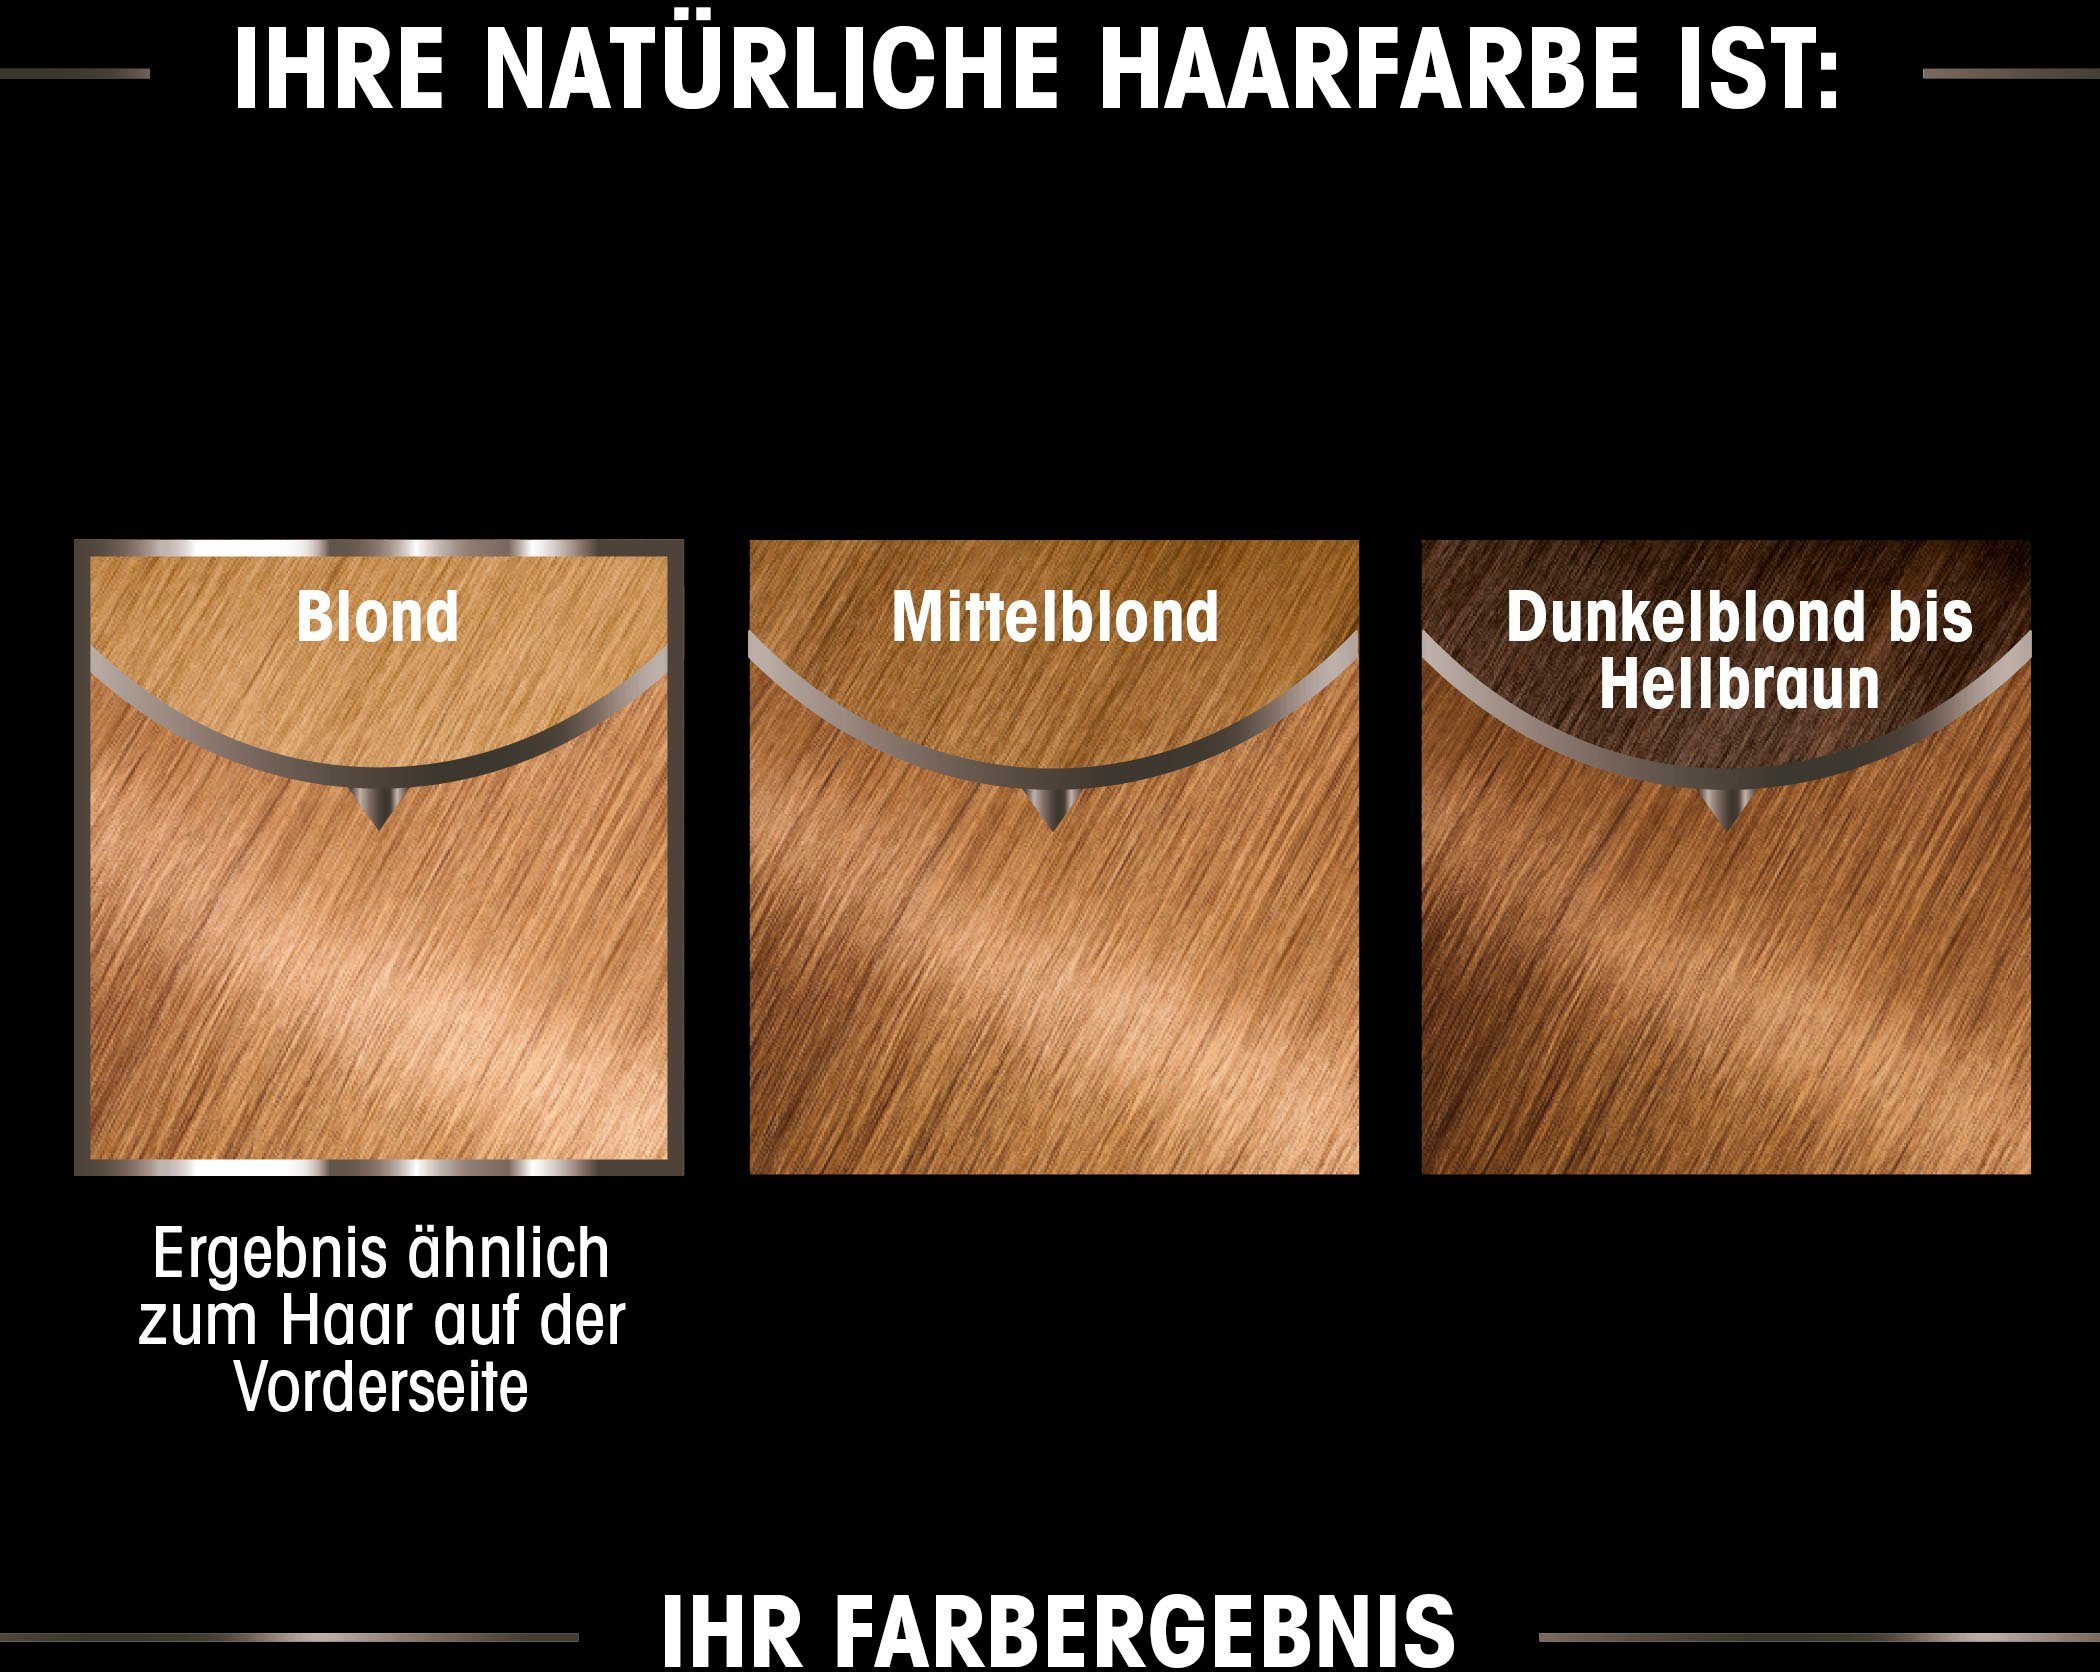 Honigblond 3-tlg., Haarfarbe, 8.31 dauerhafte Garnier GARNIER Coloration Olia Set,